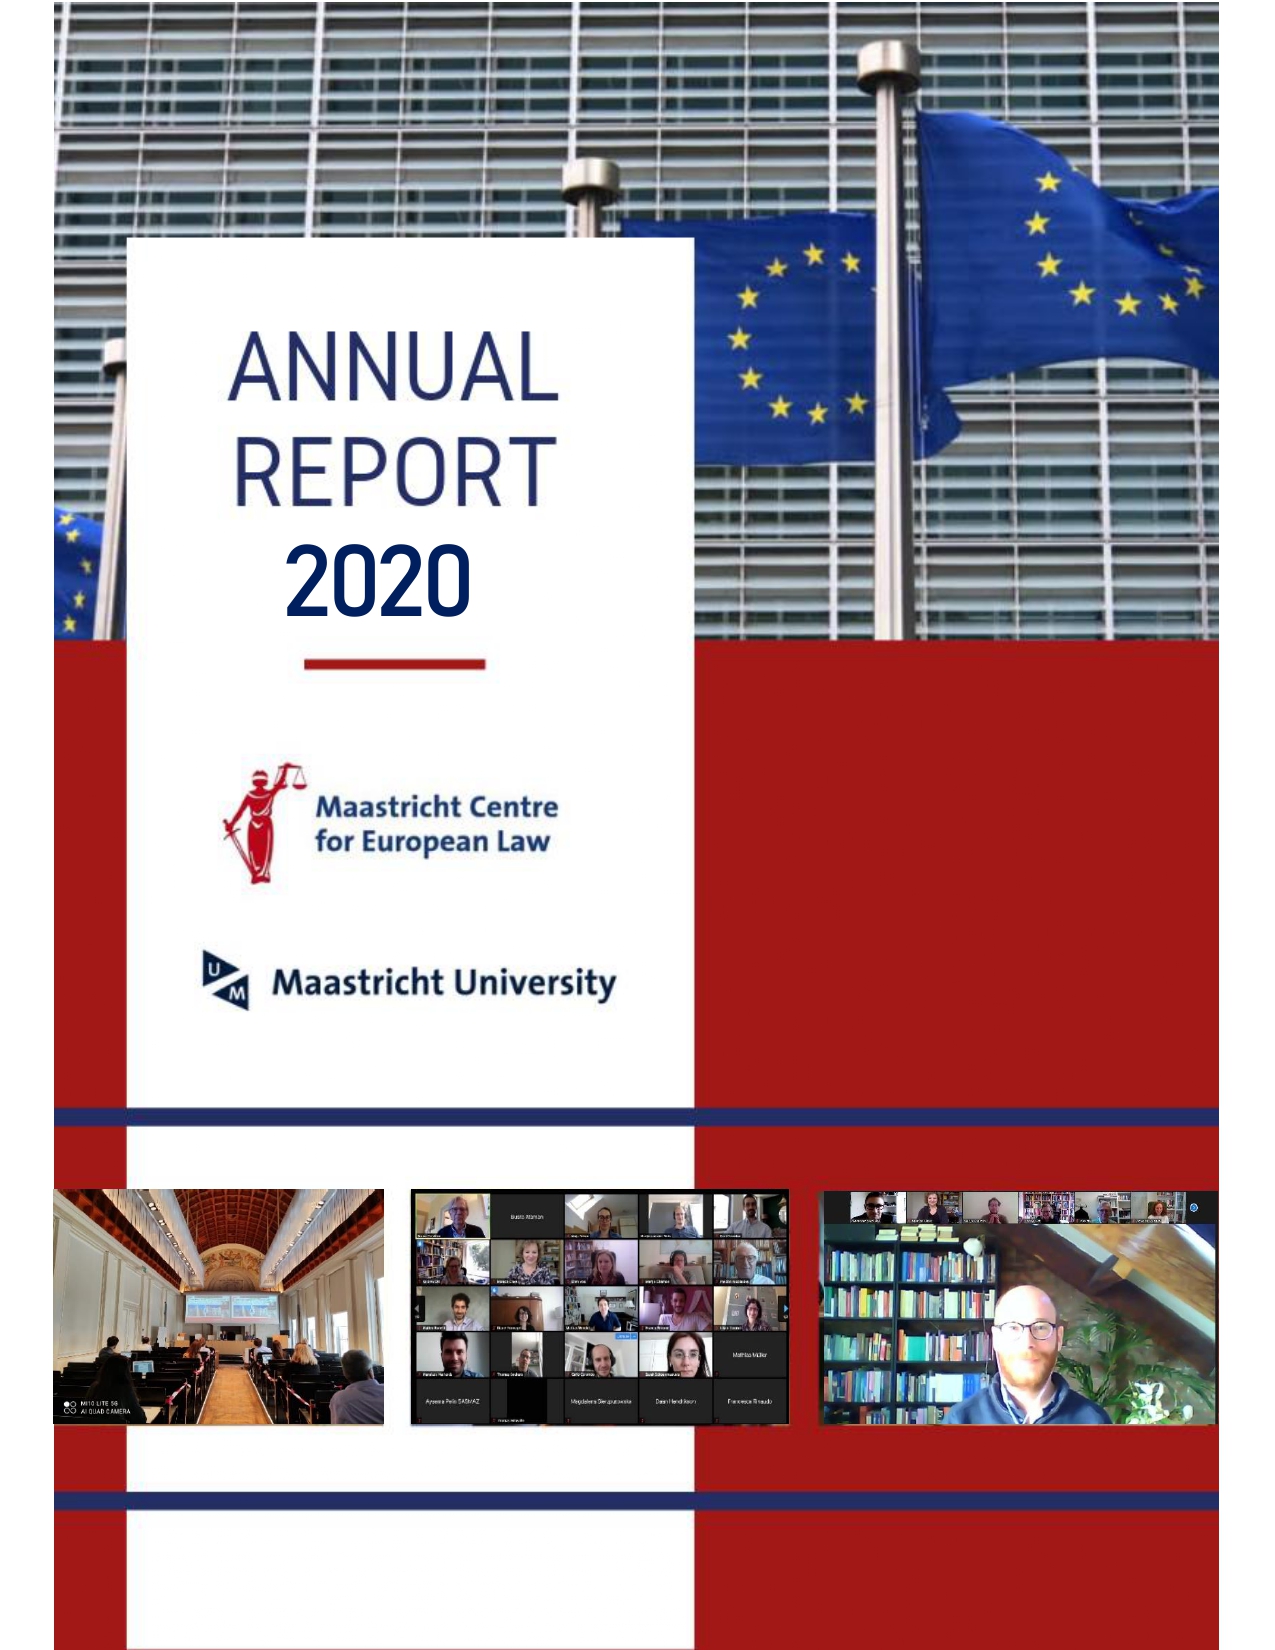 mcel_annual_report_2020_image.jpg